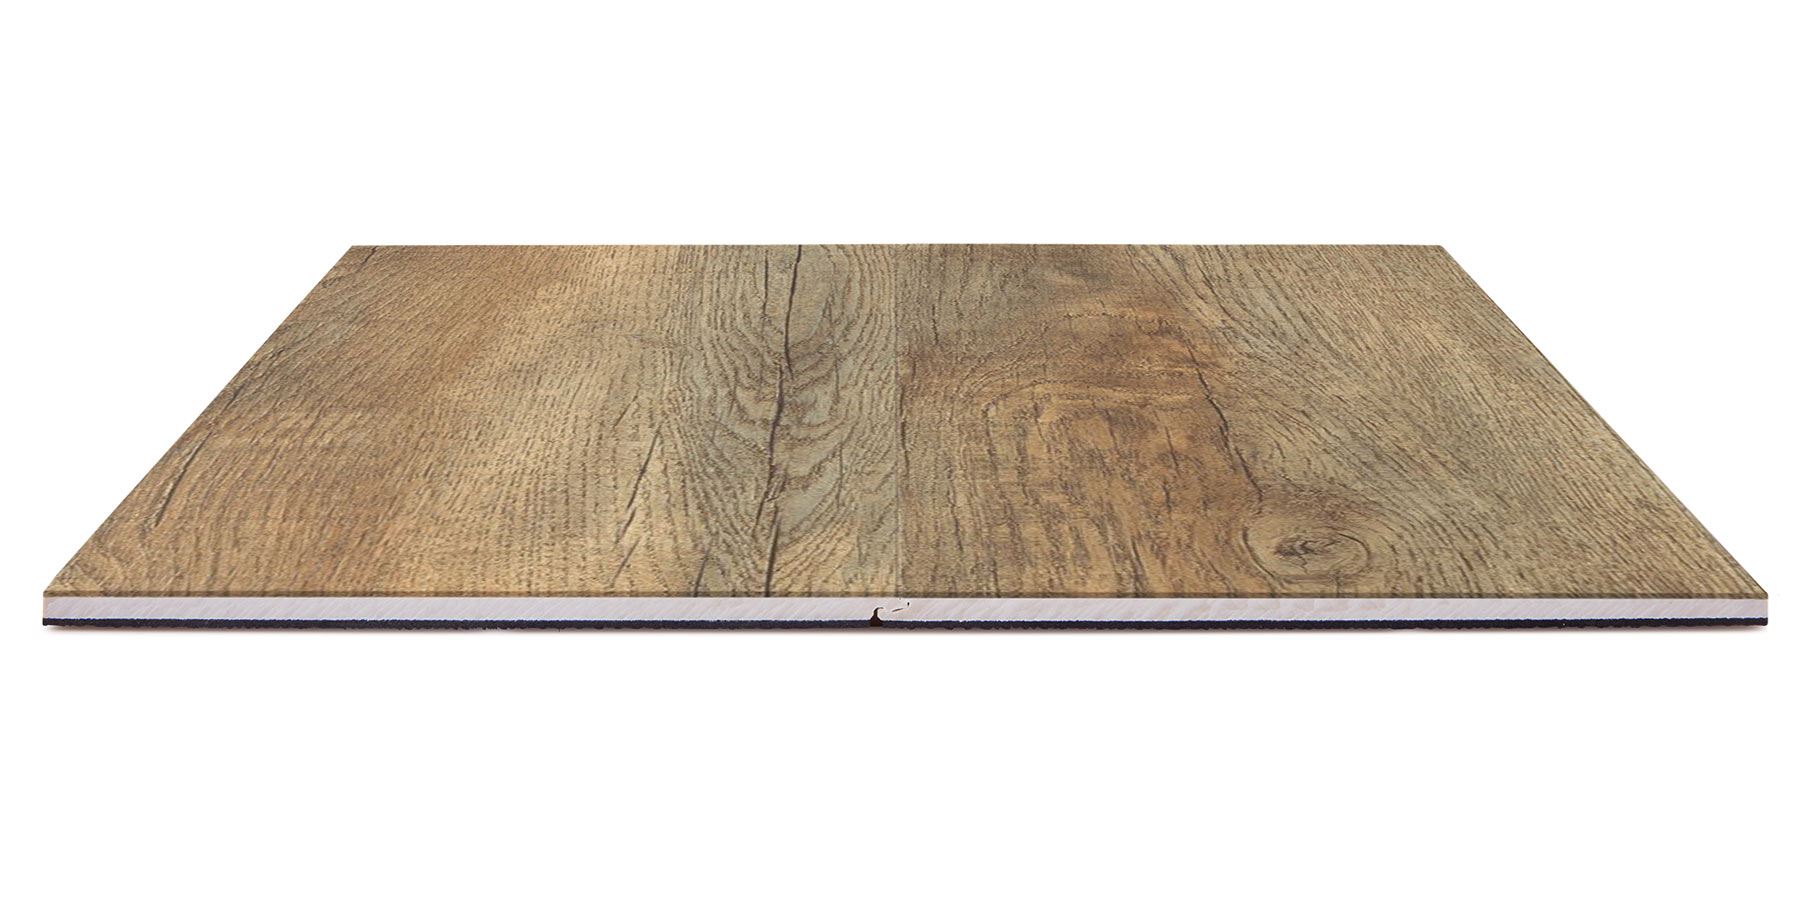 Barnsdale Vinyl Plank Flooring